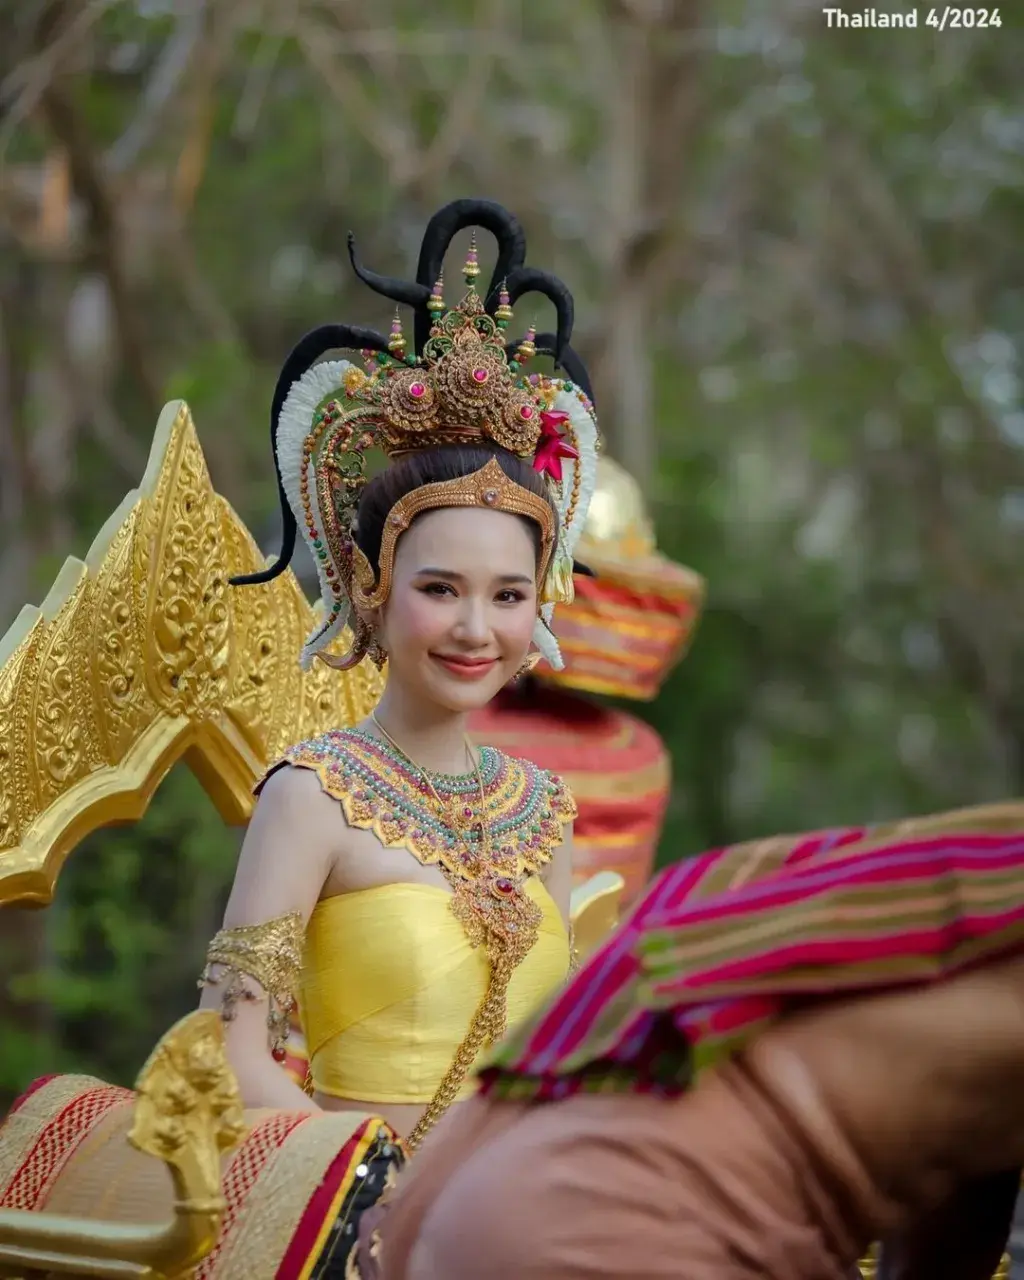 THAILAND 🇹🇭 |  ANCIENT COSTUME IN LAVO KINGDOM